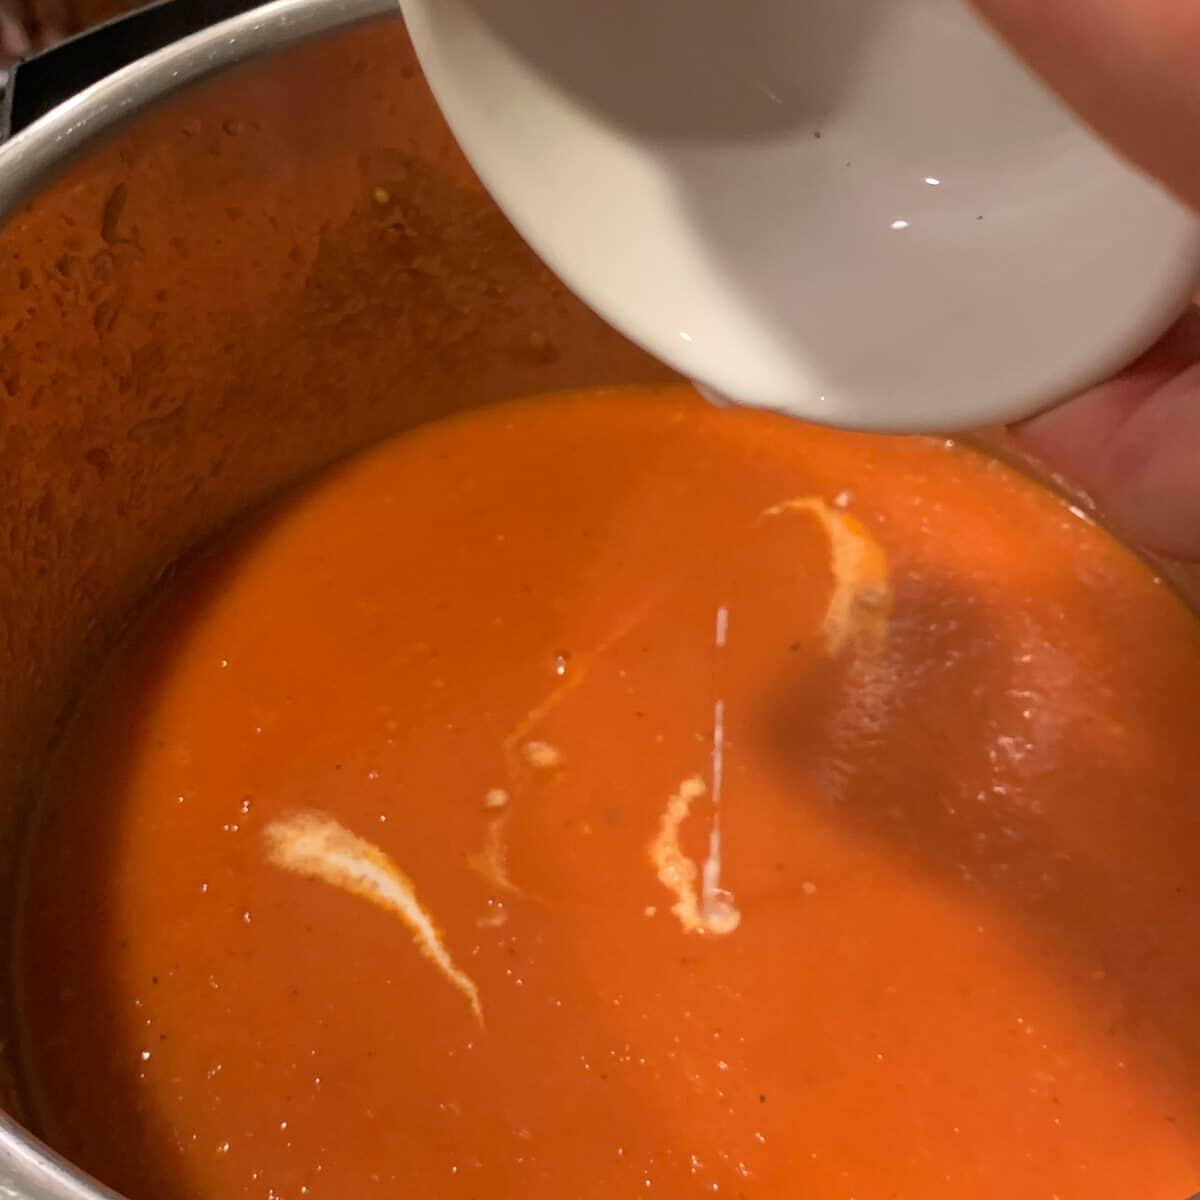 pouring milk into finish tomato soup